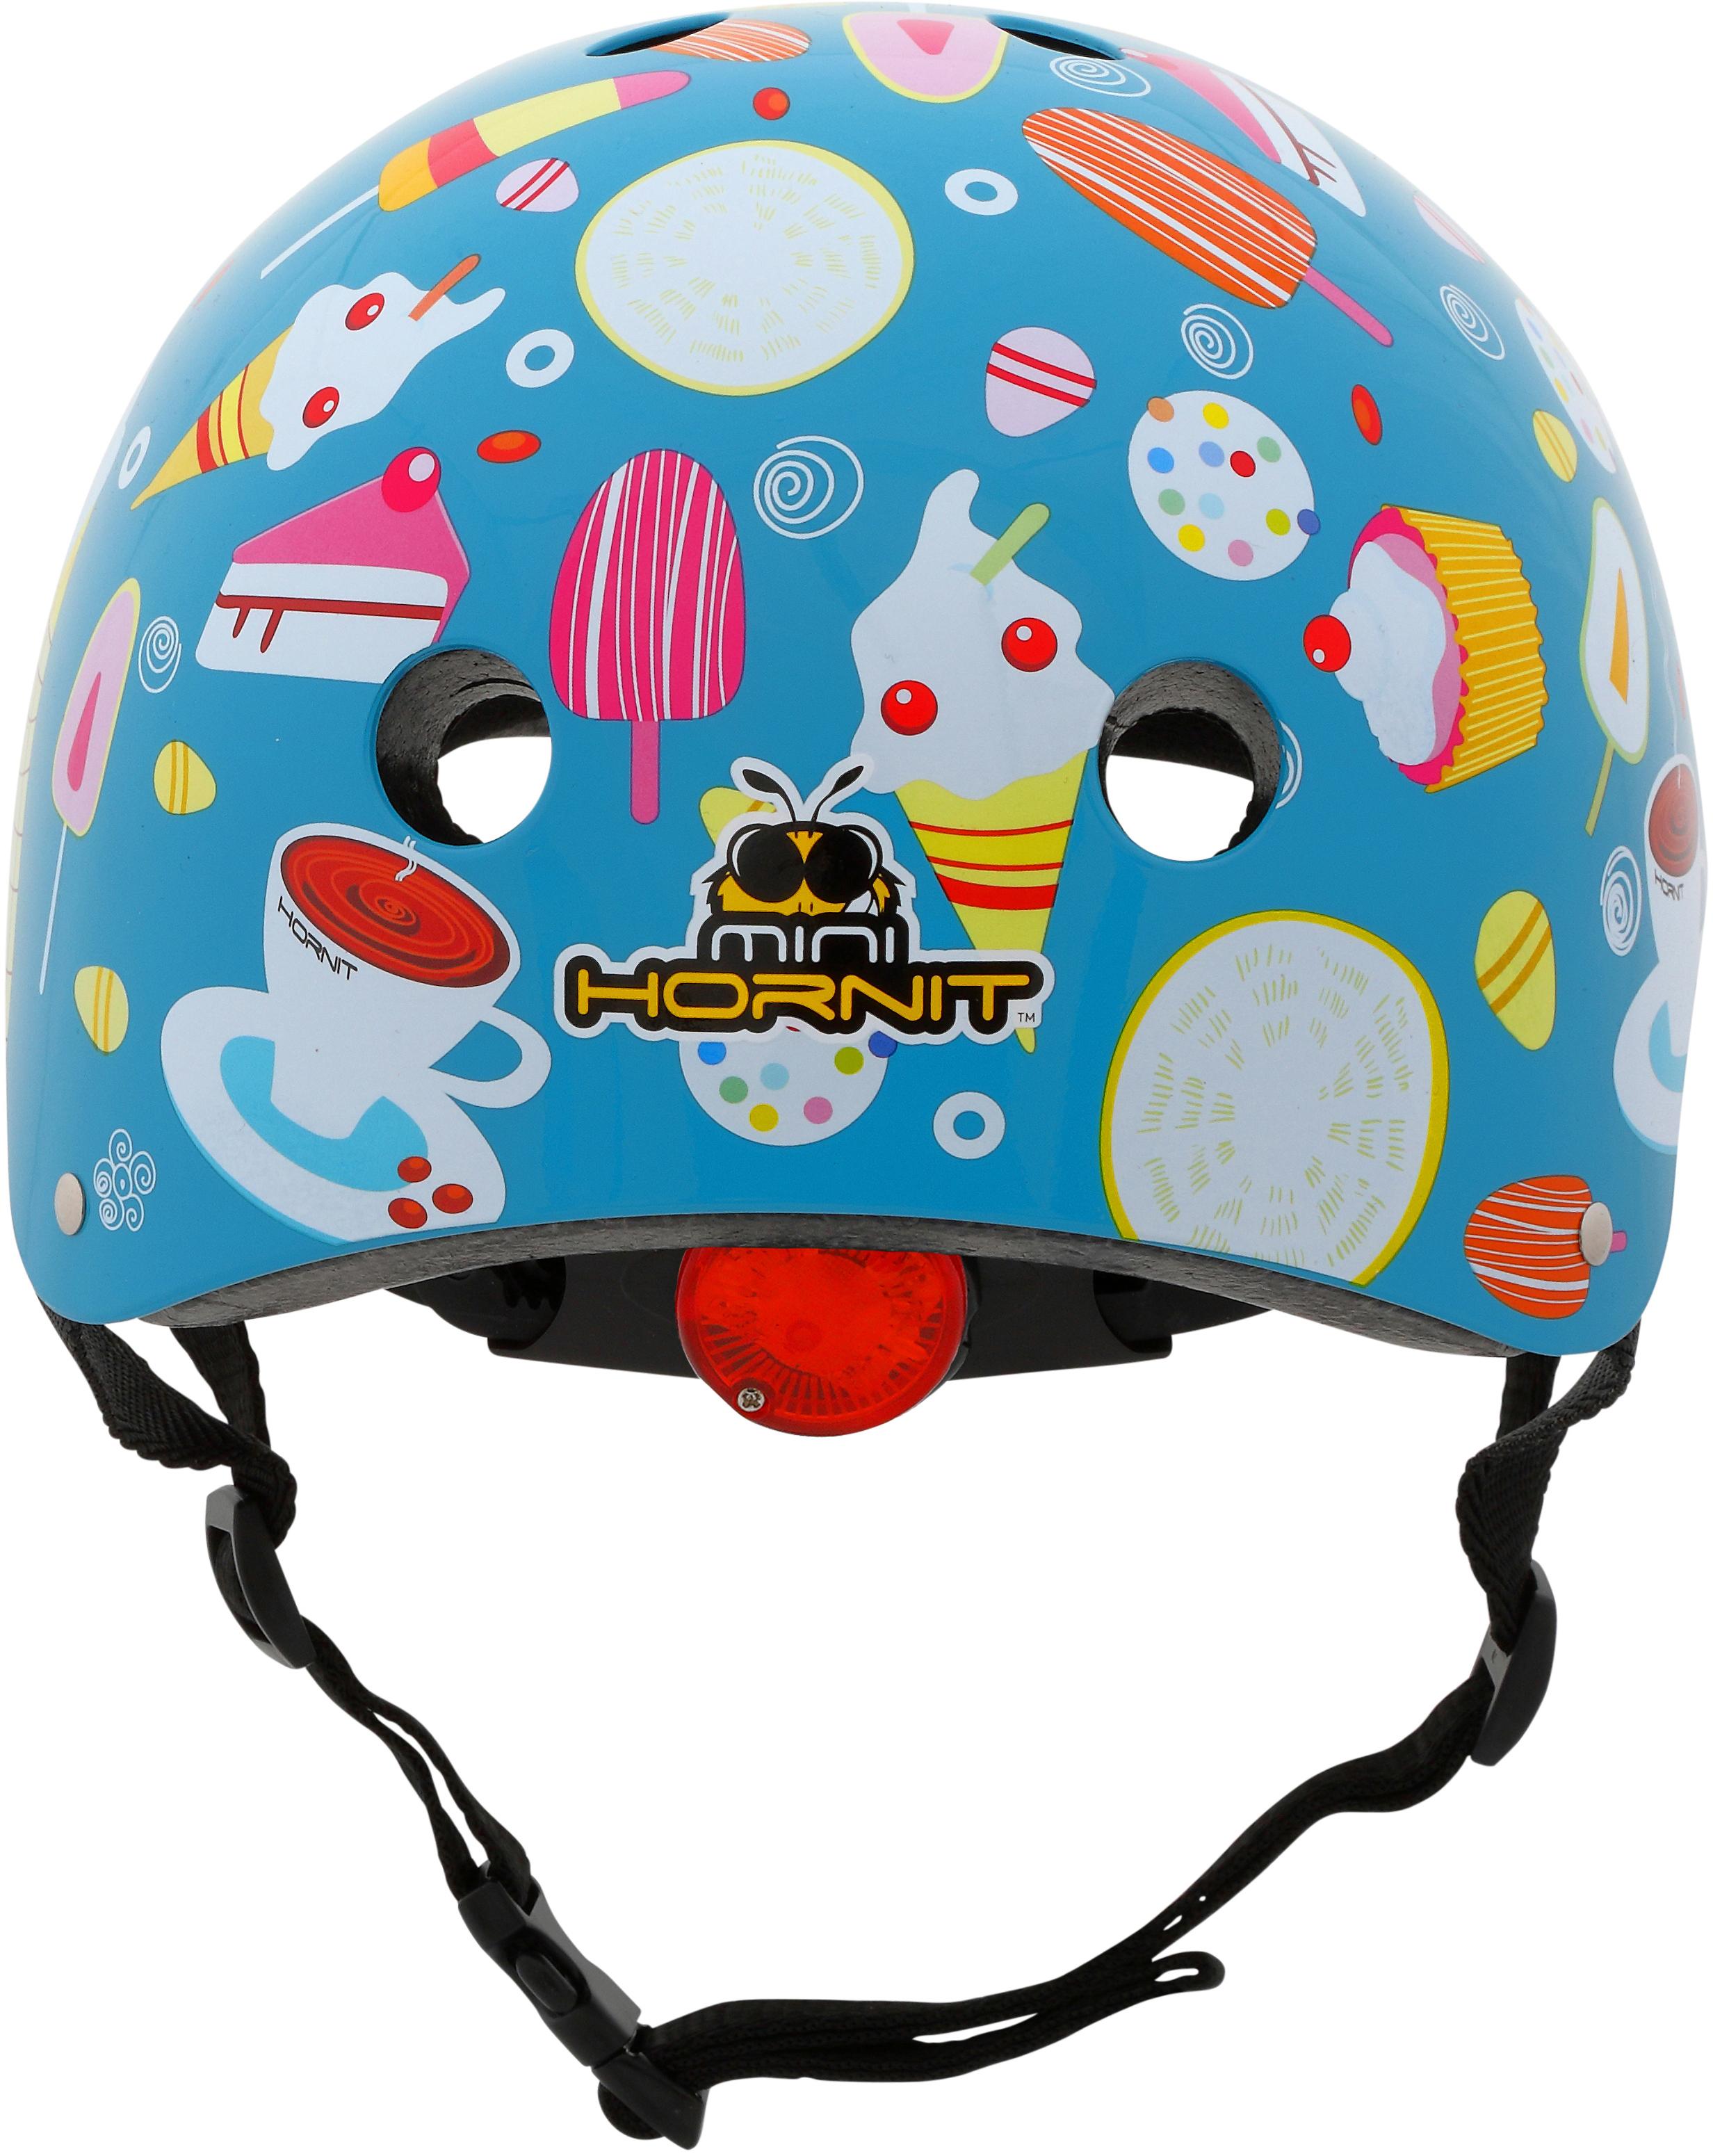 hornit ice cream helmet